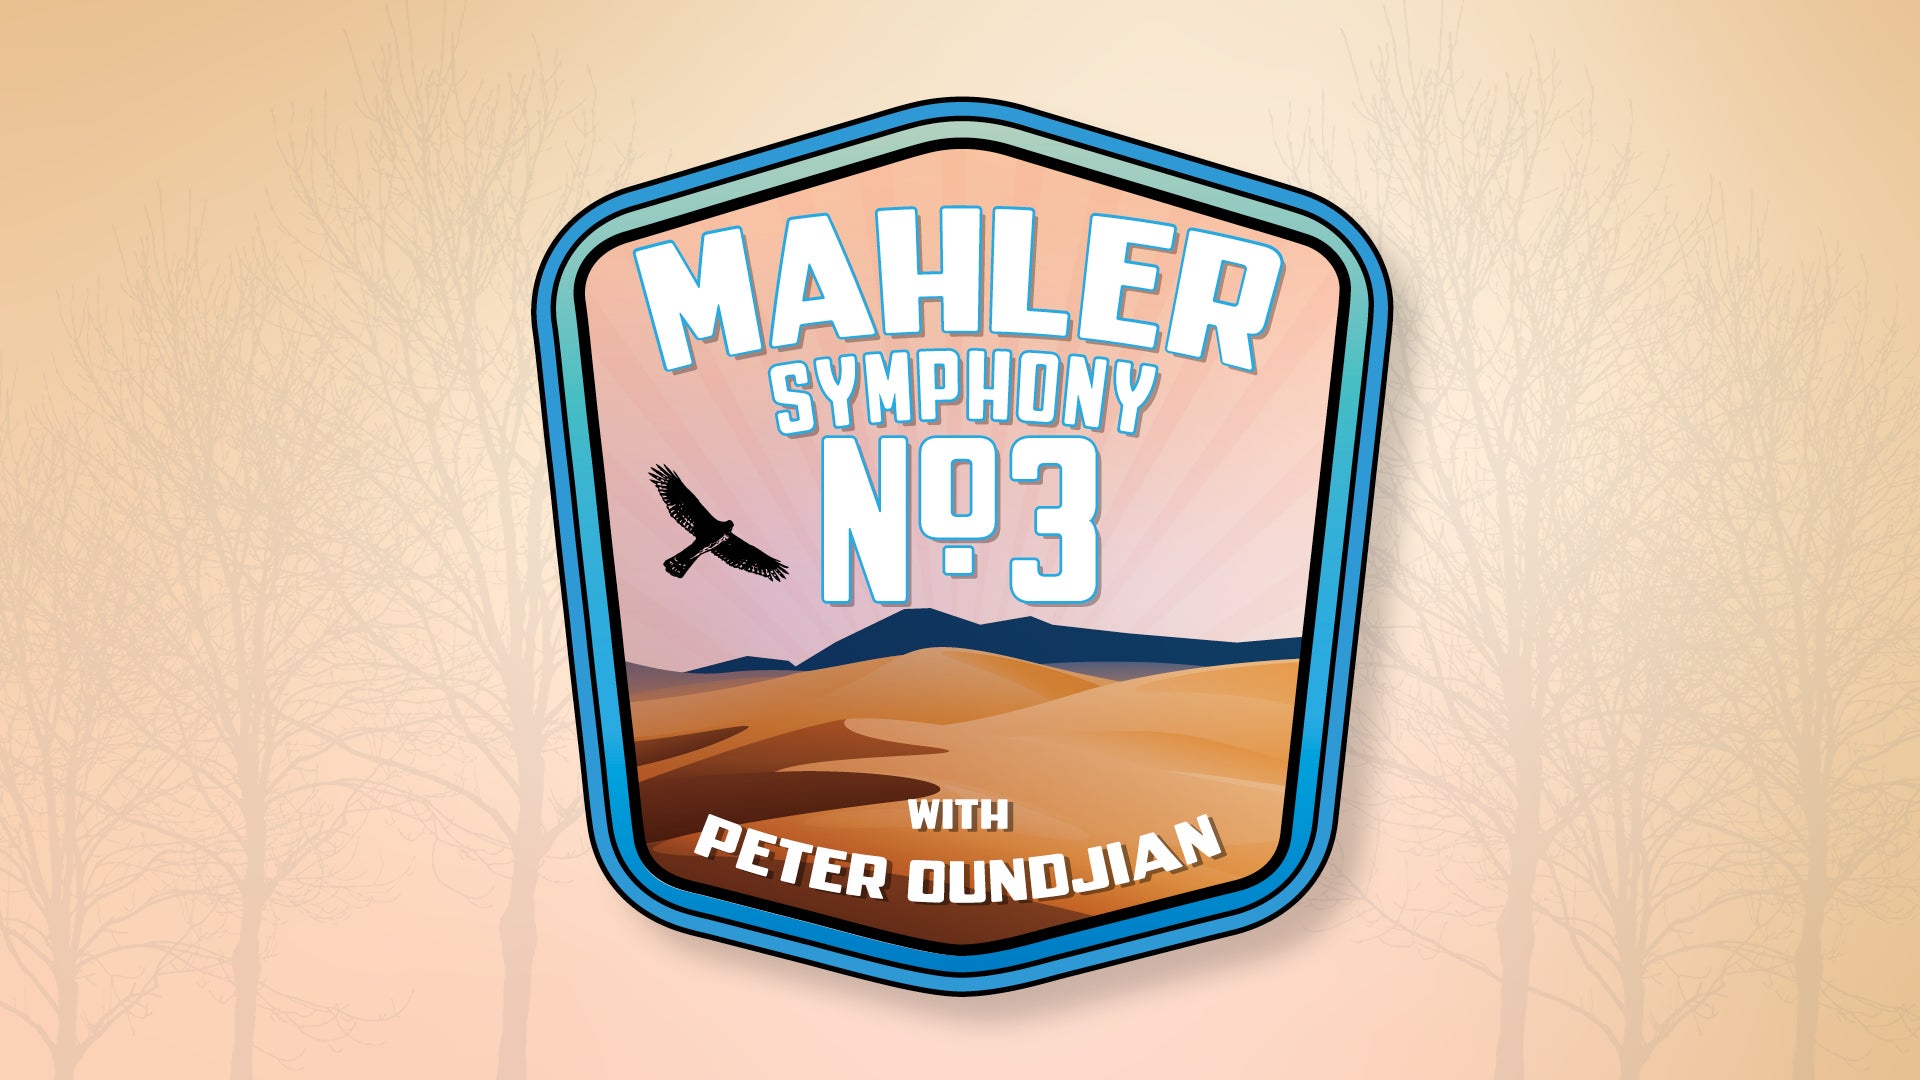 Mahler's Symphony No. 3 with Peter Oundjian